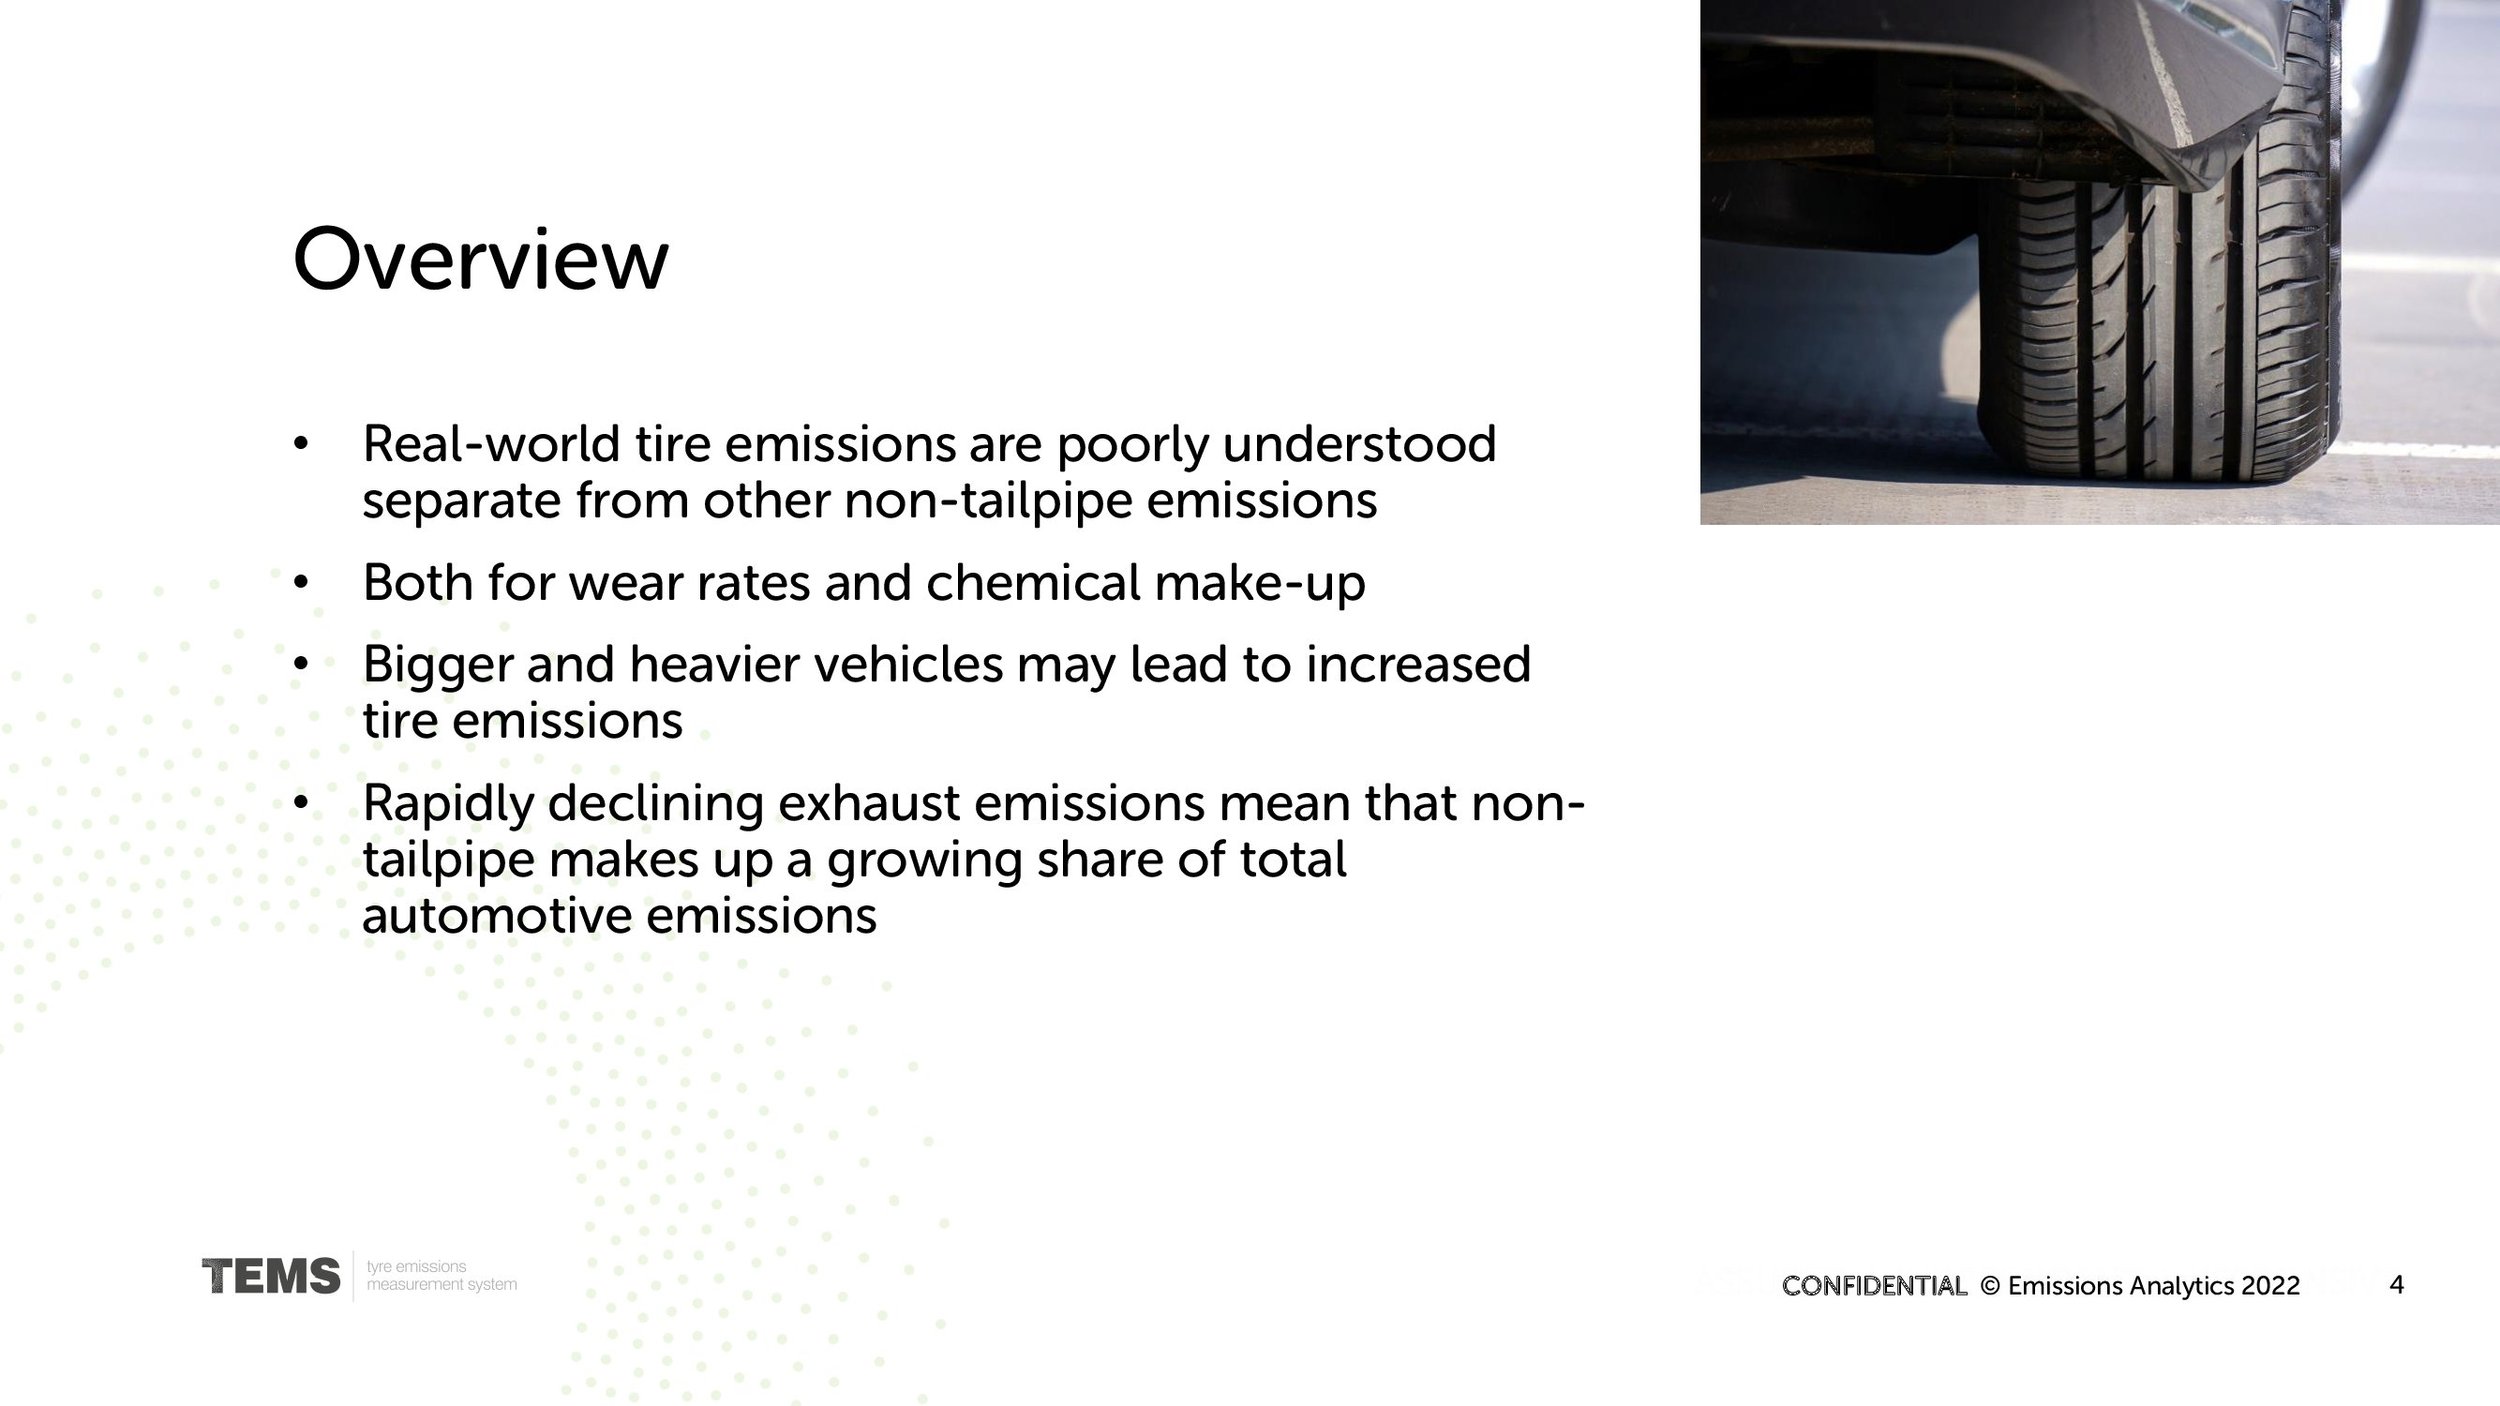 Emissions Analytics CRC tires presentation 16 March 2022_00004.jpg